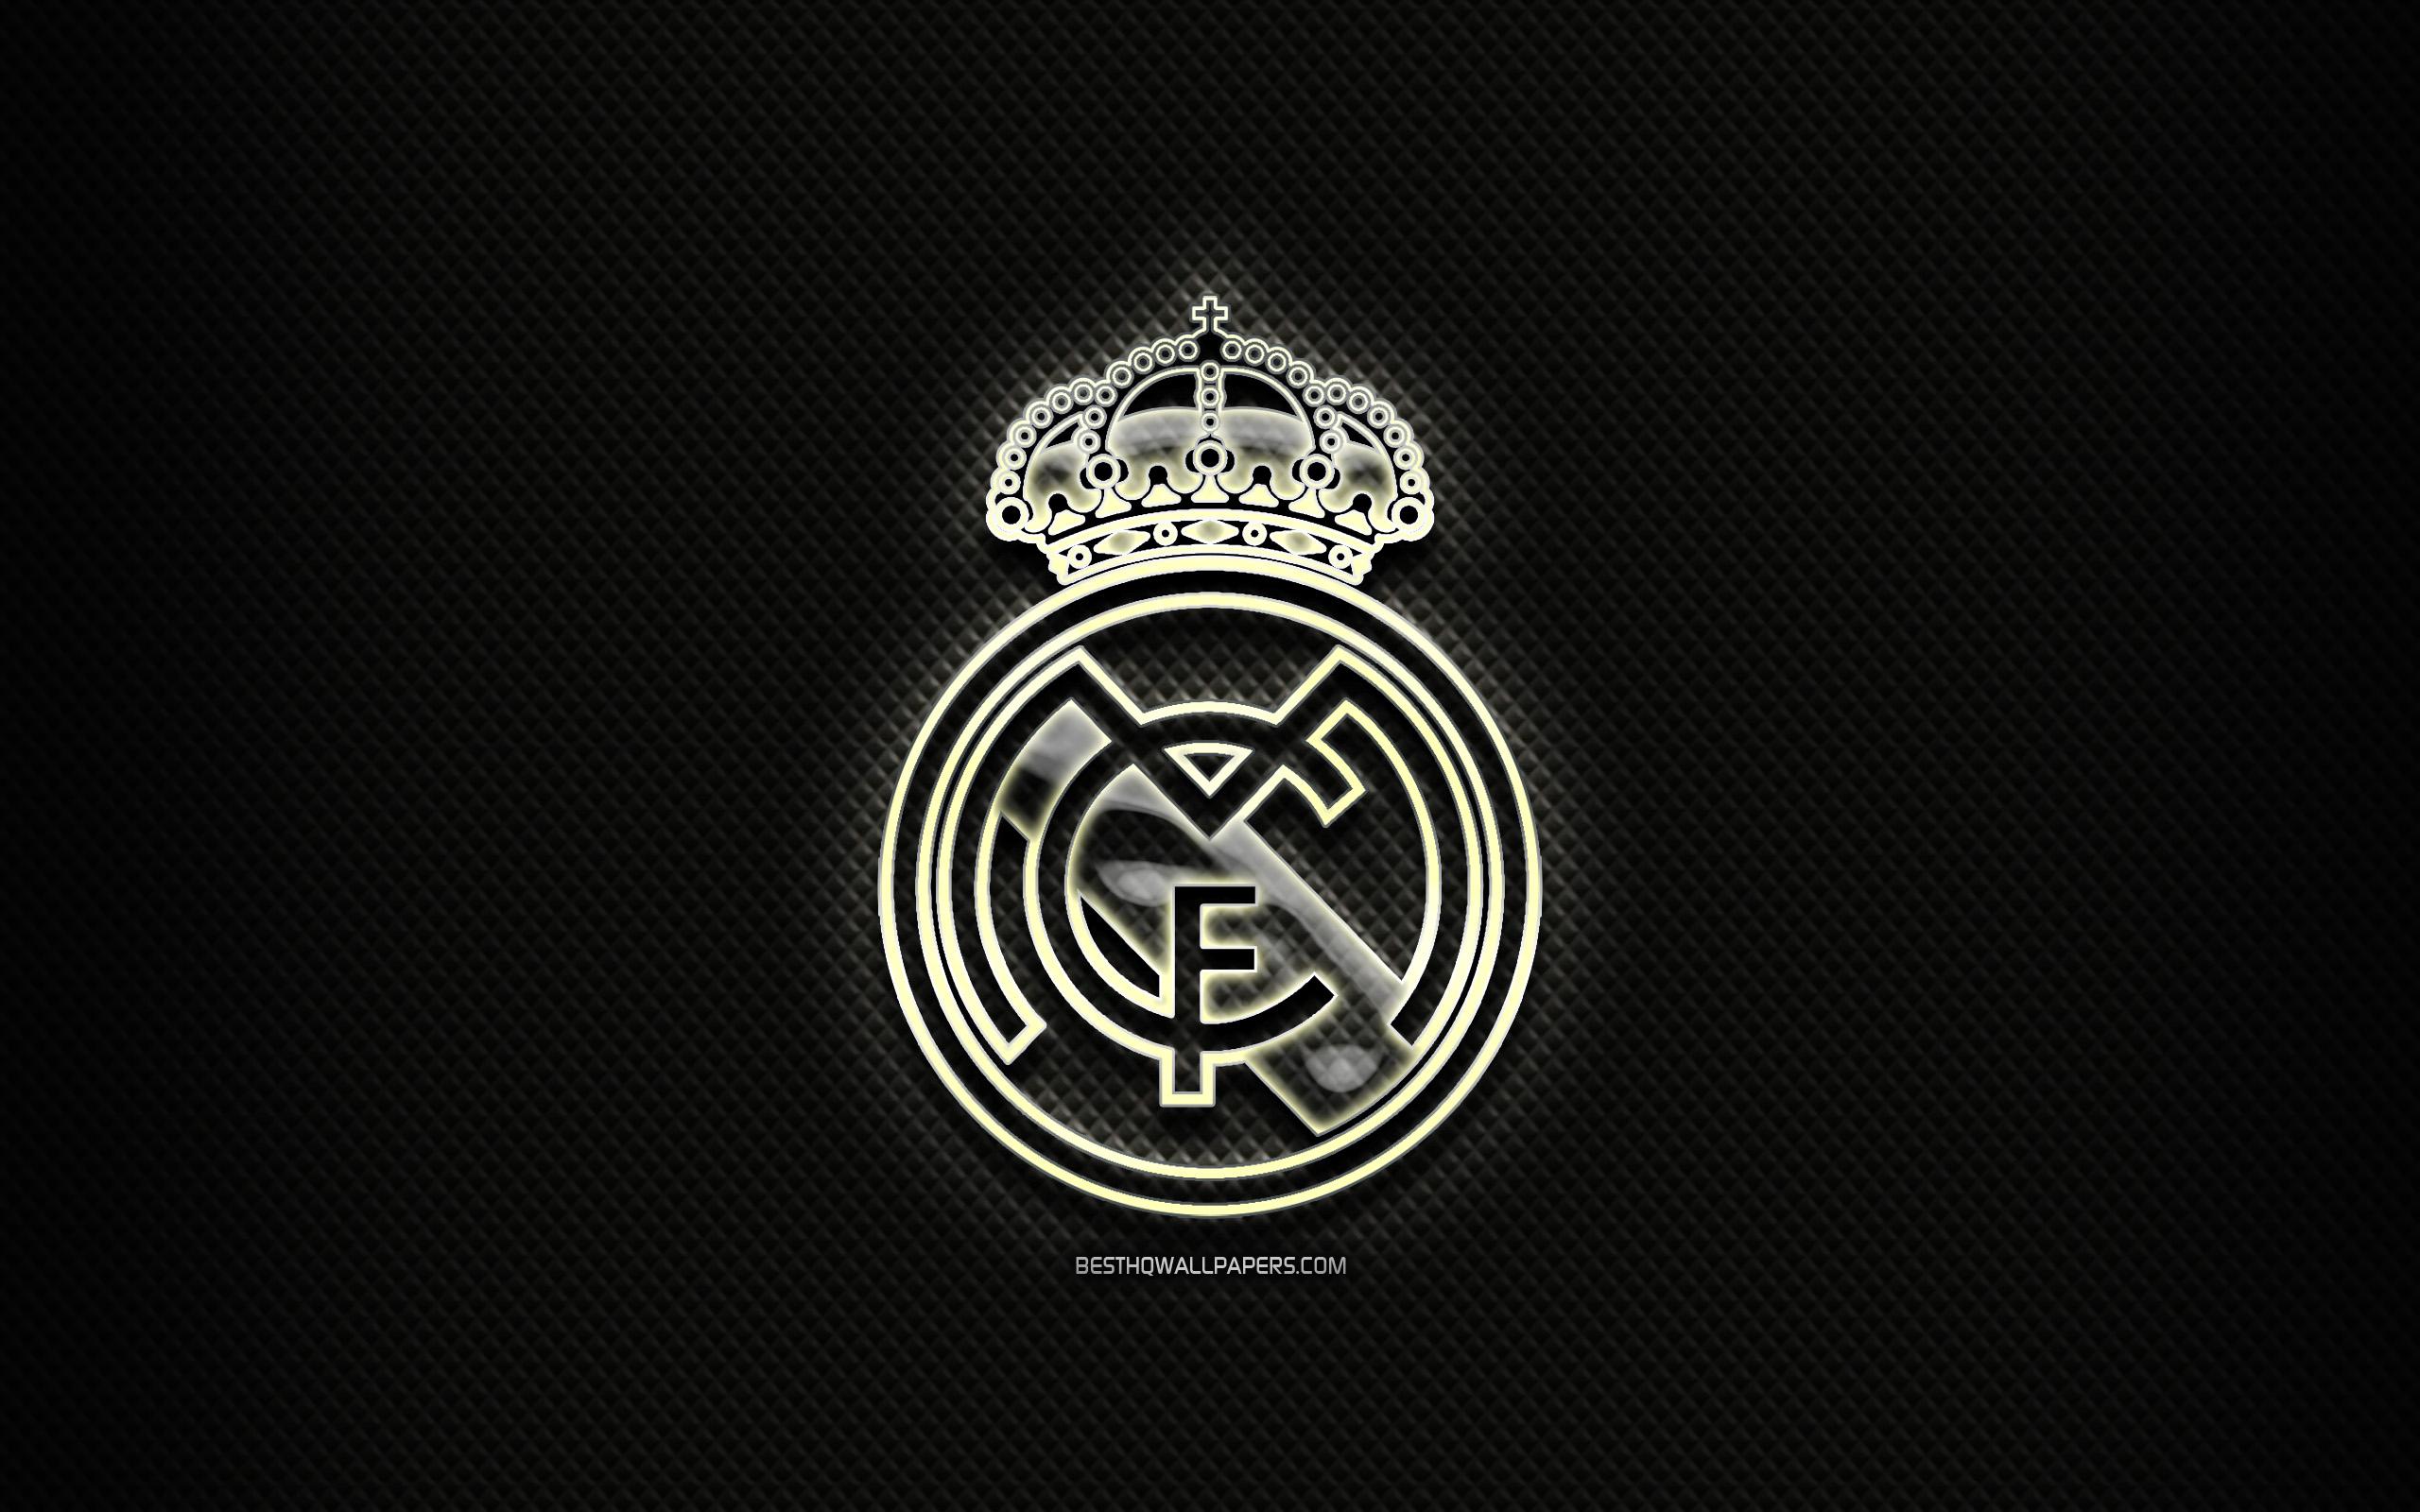 Download wallpaper Real Madrid CF, glass logo, black rhombic